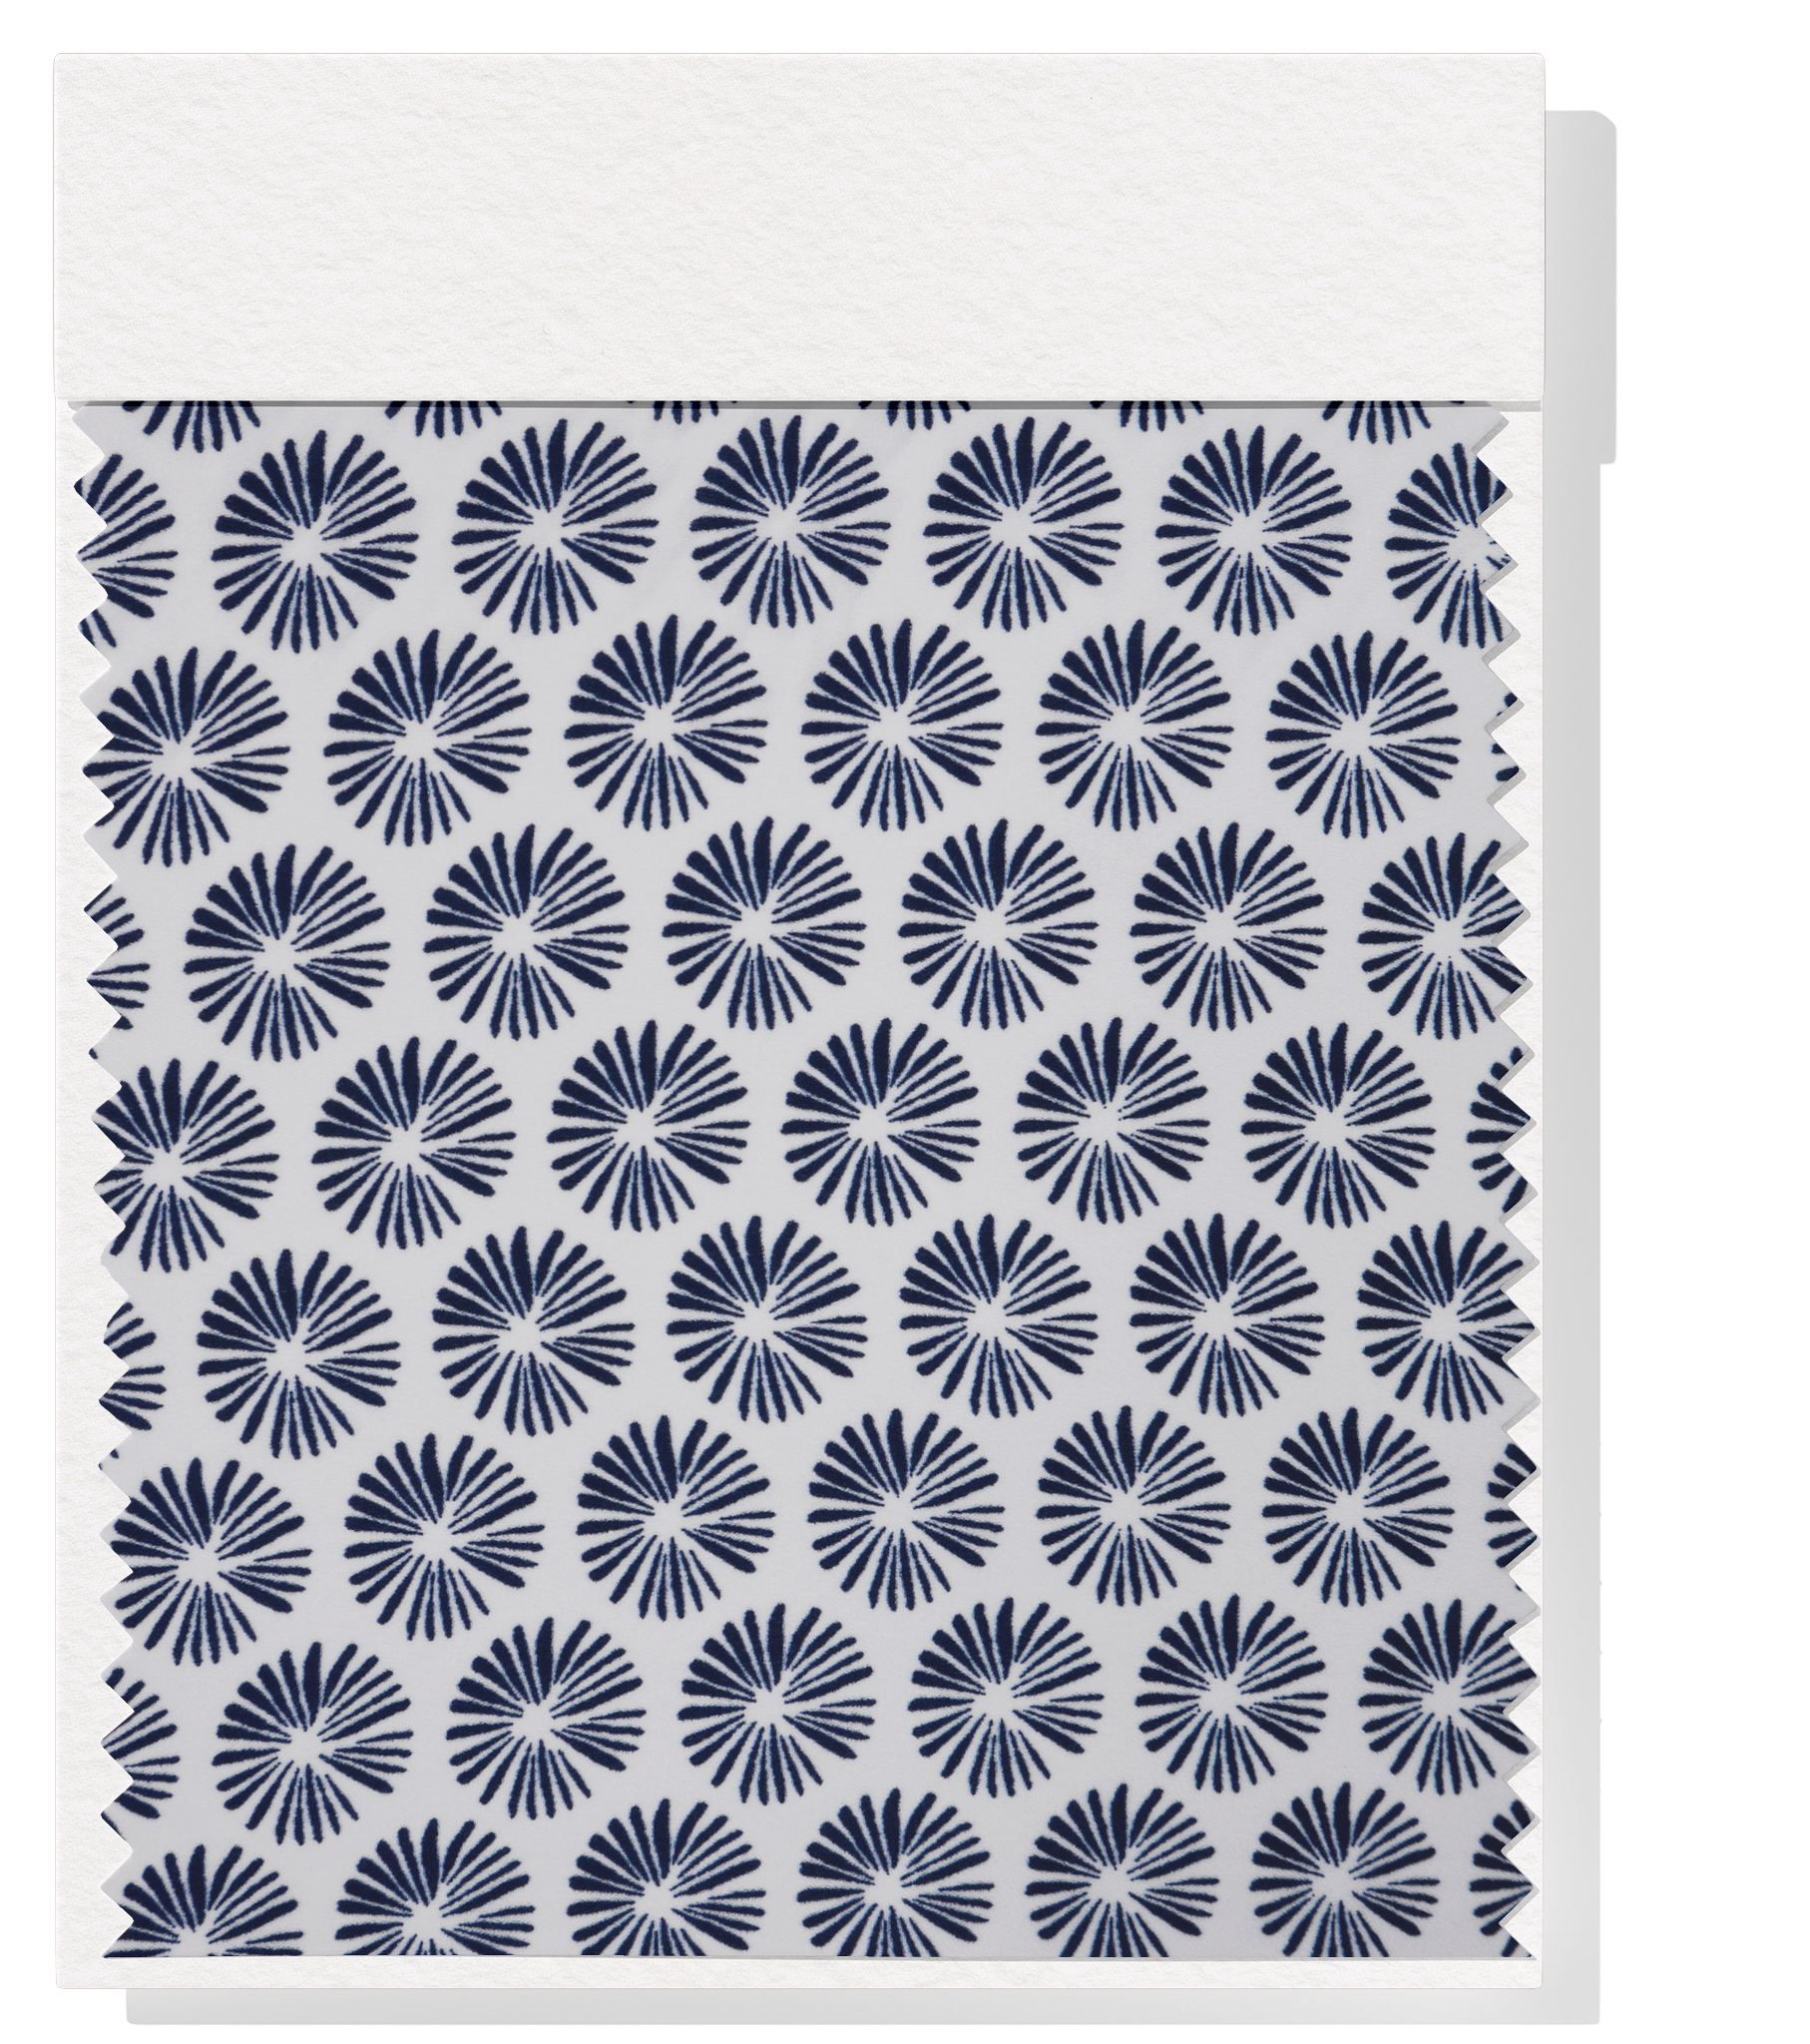 Printed Polyester Chiffon $10.00p/m - White w/ navy flowers